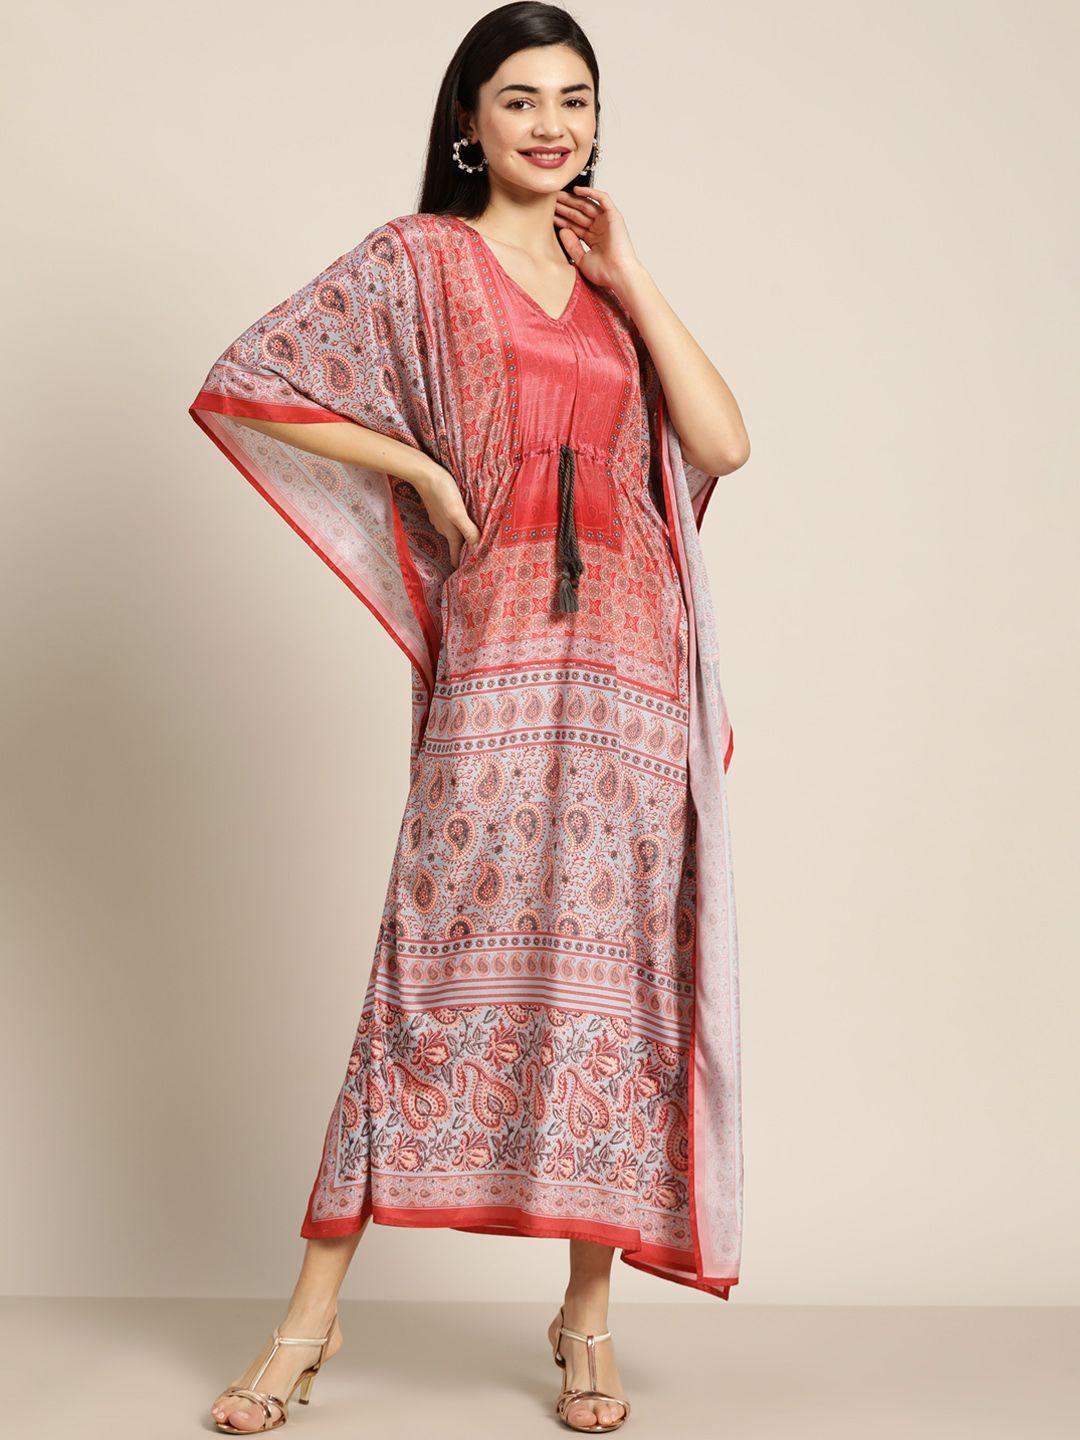 shae by sassafras pink & grey ethnic motifs kaftan maxi dress